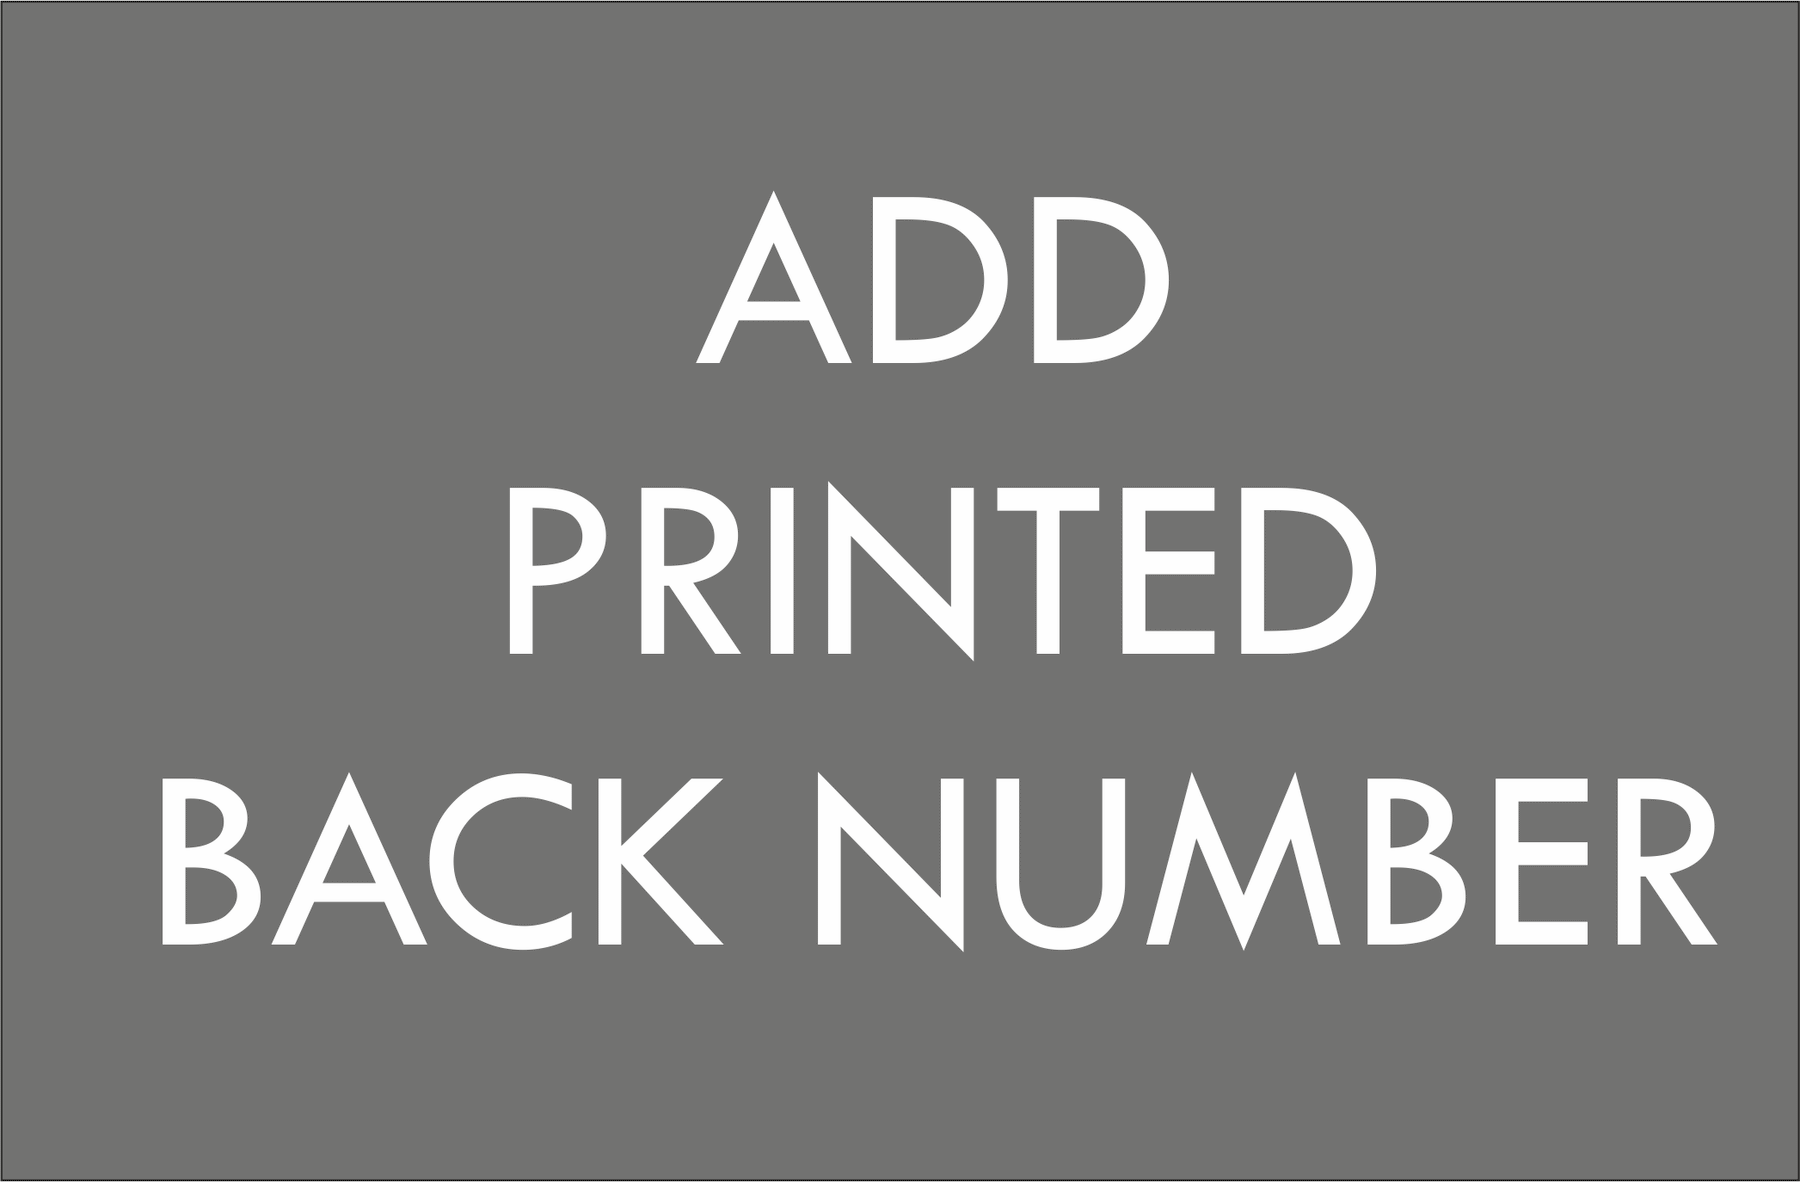 Add printed number - Large / back